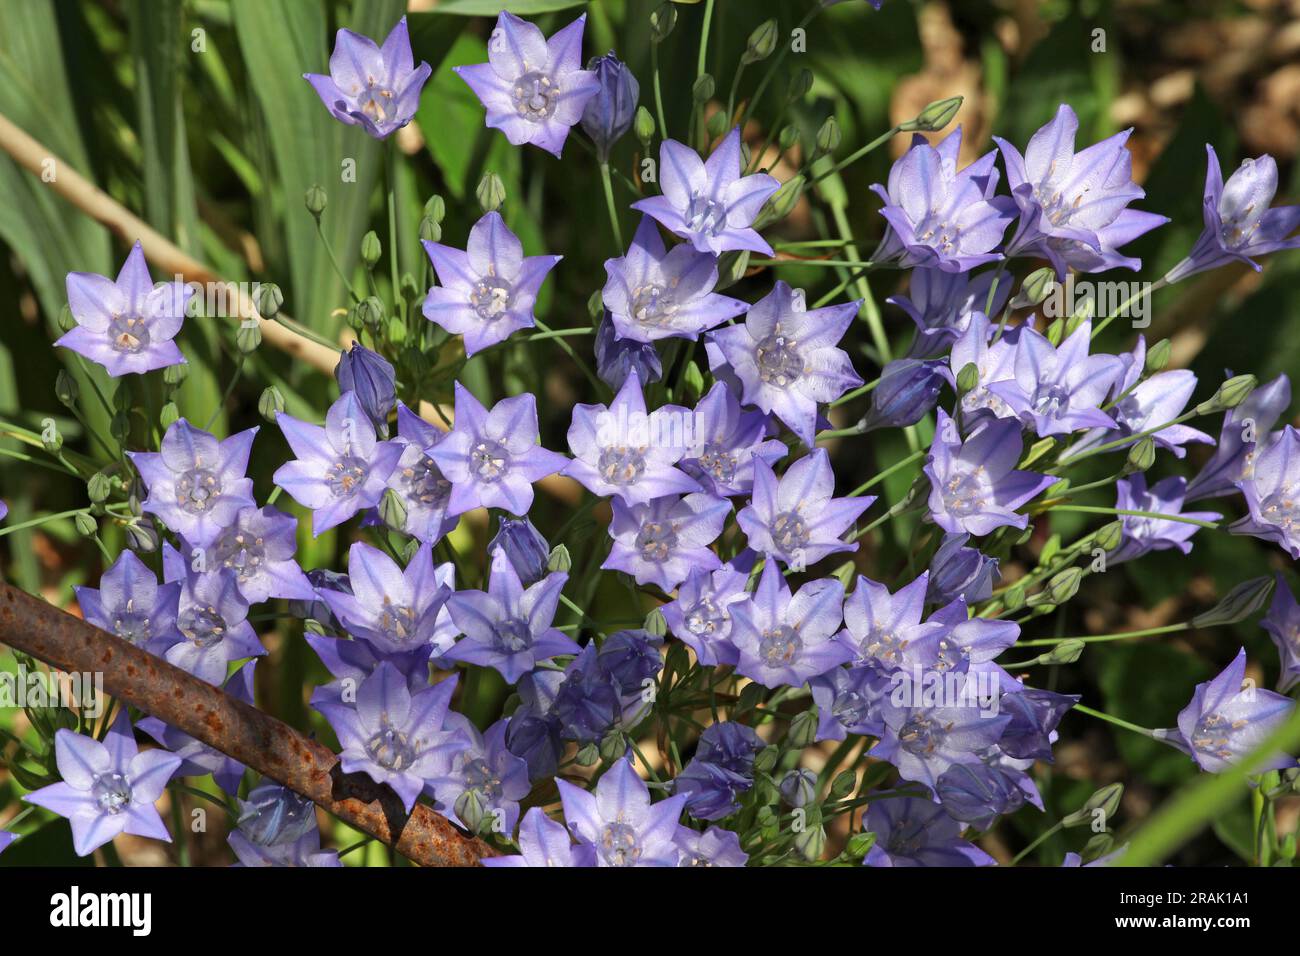 Purple grassnut triplet lilies in flower. Stock Photo